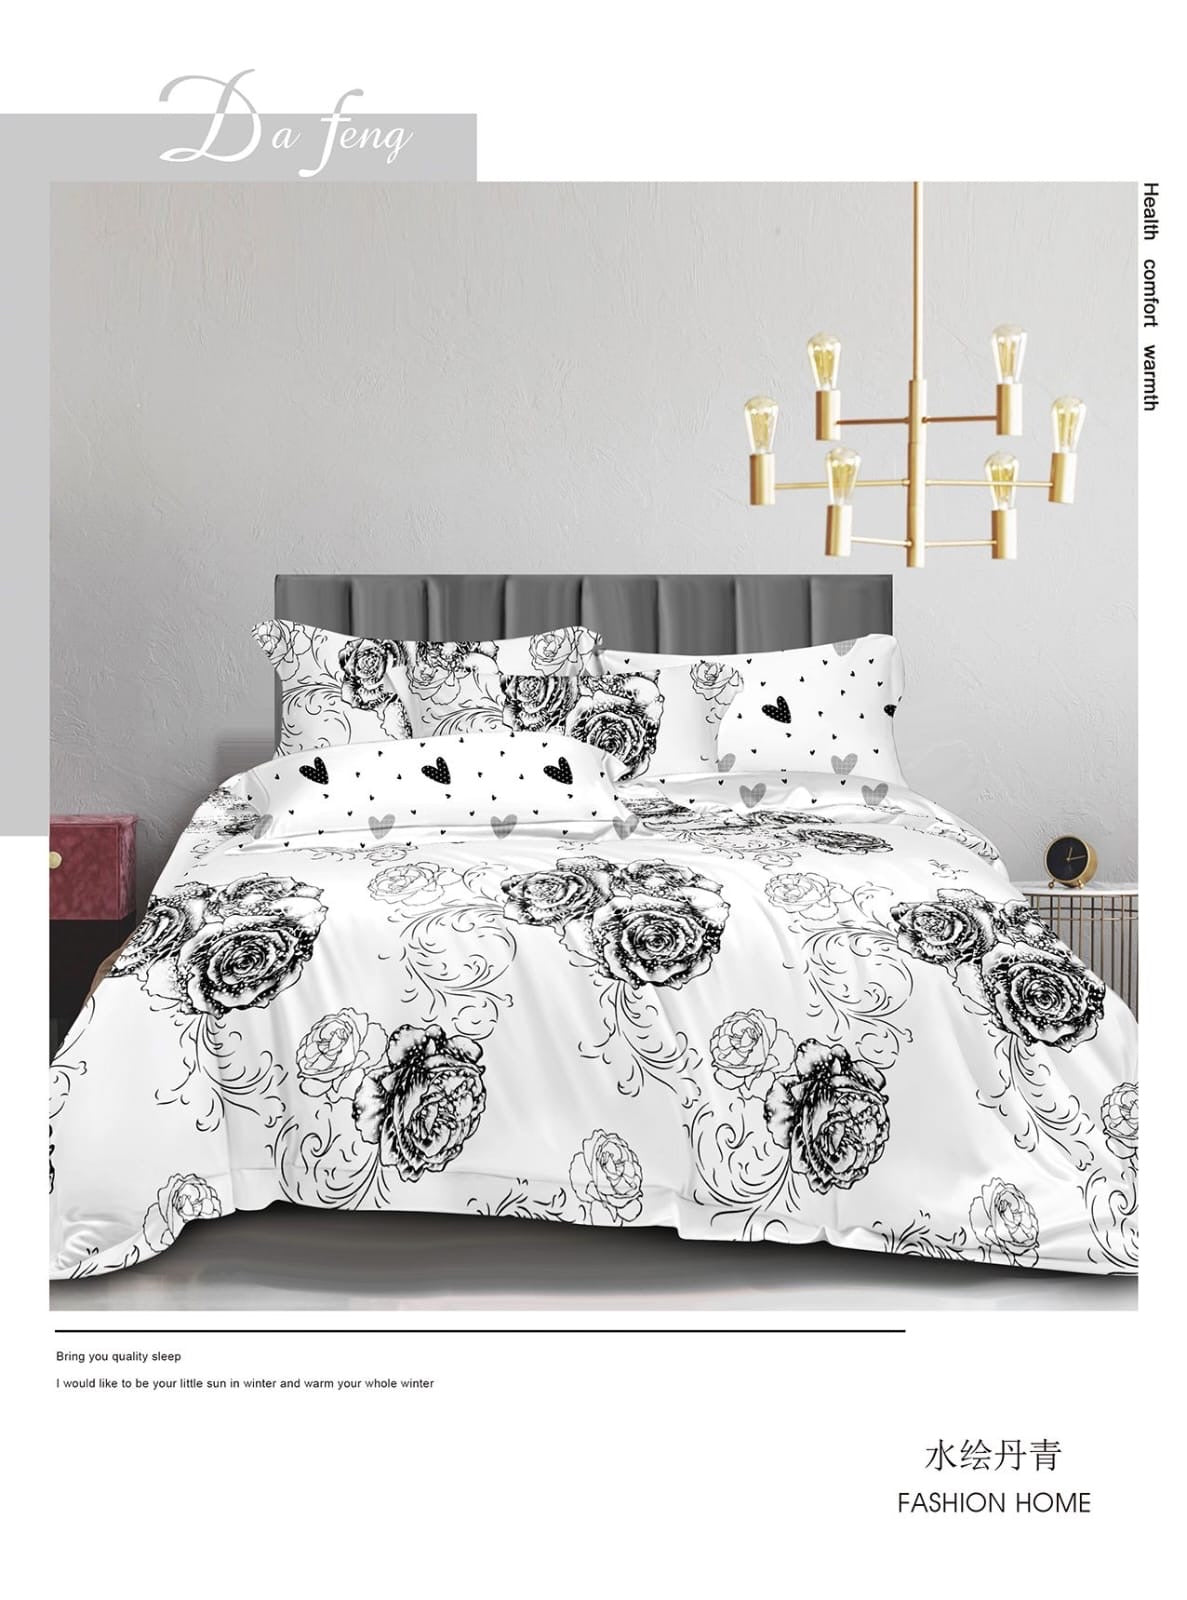 Queen size comforter 4 pieces set - 160x200cm